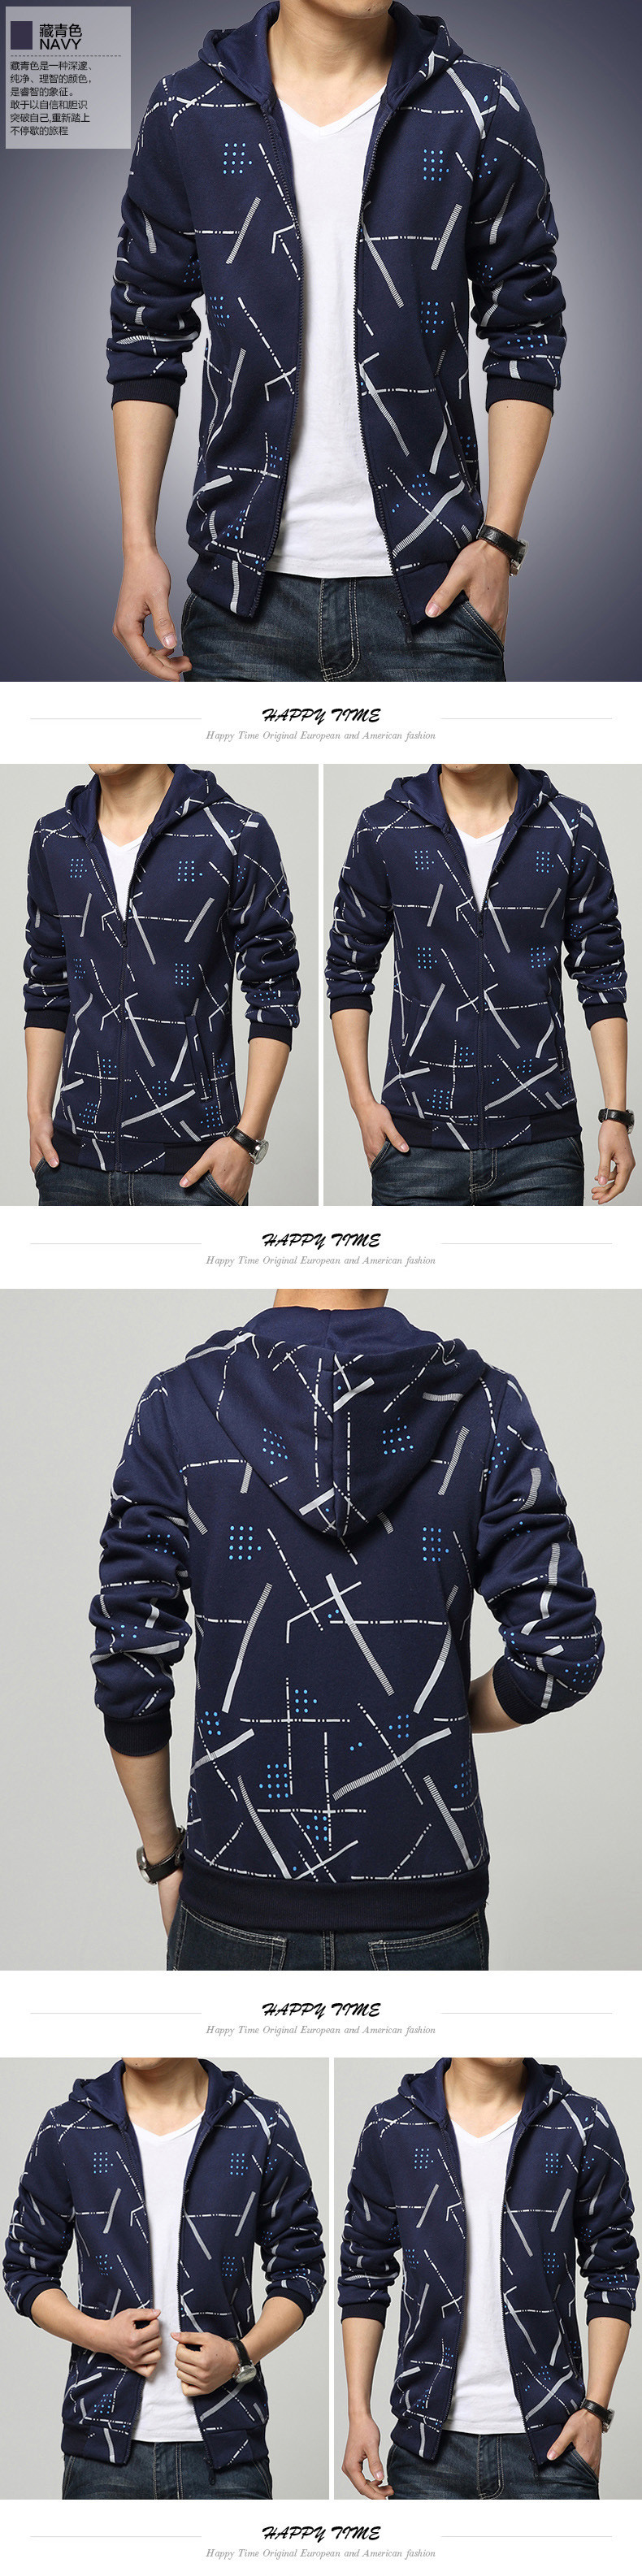 New-Fashion-Men39s-Hoodies-Men-Jacket-Tracksuits-Irregular-Print-Zipper-Mens-Sweatshirt-Slim-Fit-Sui-32413405140